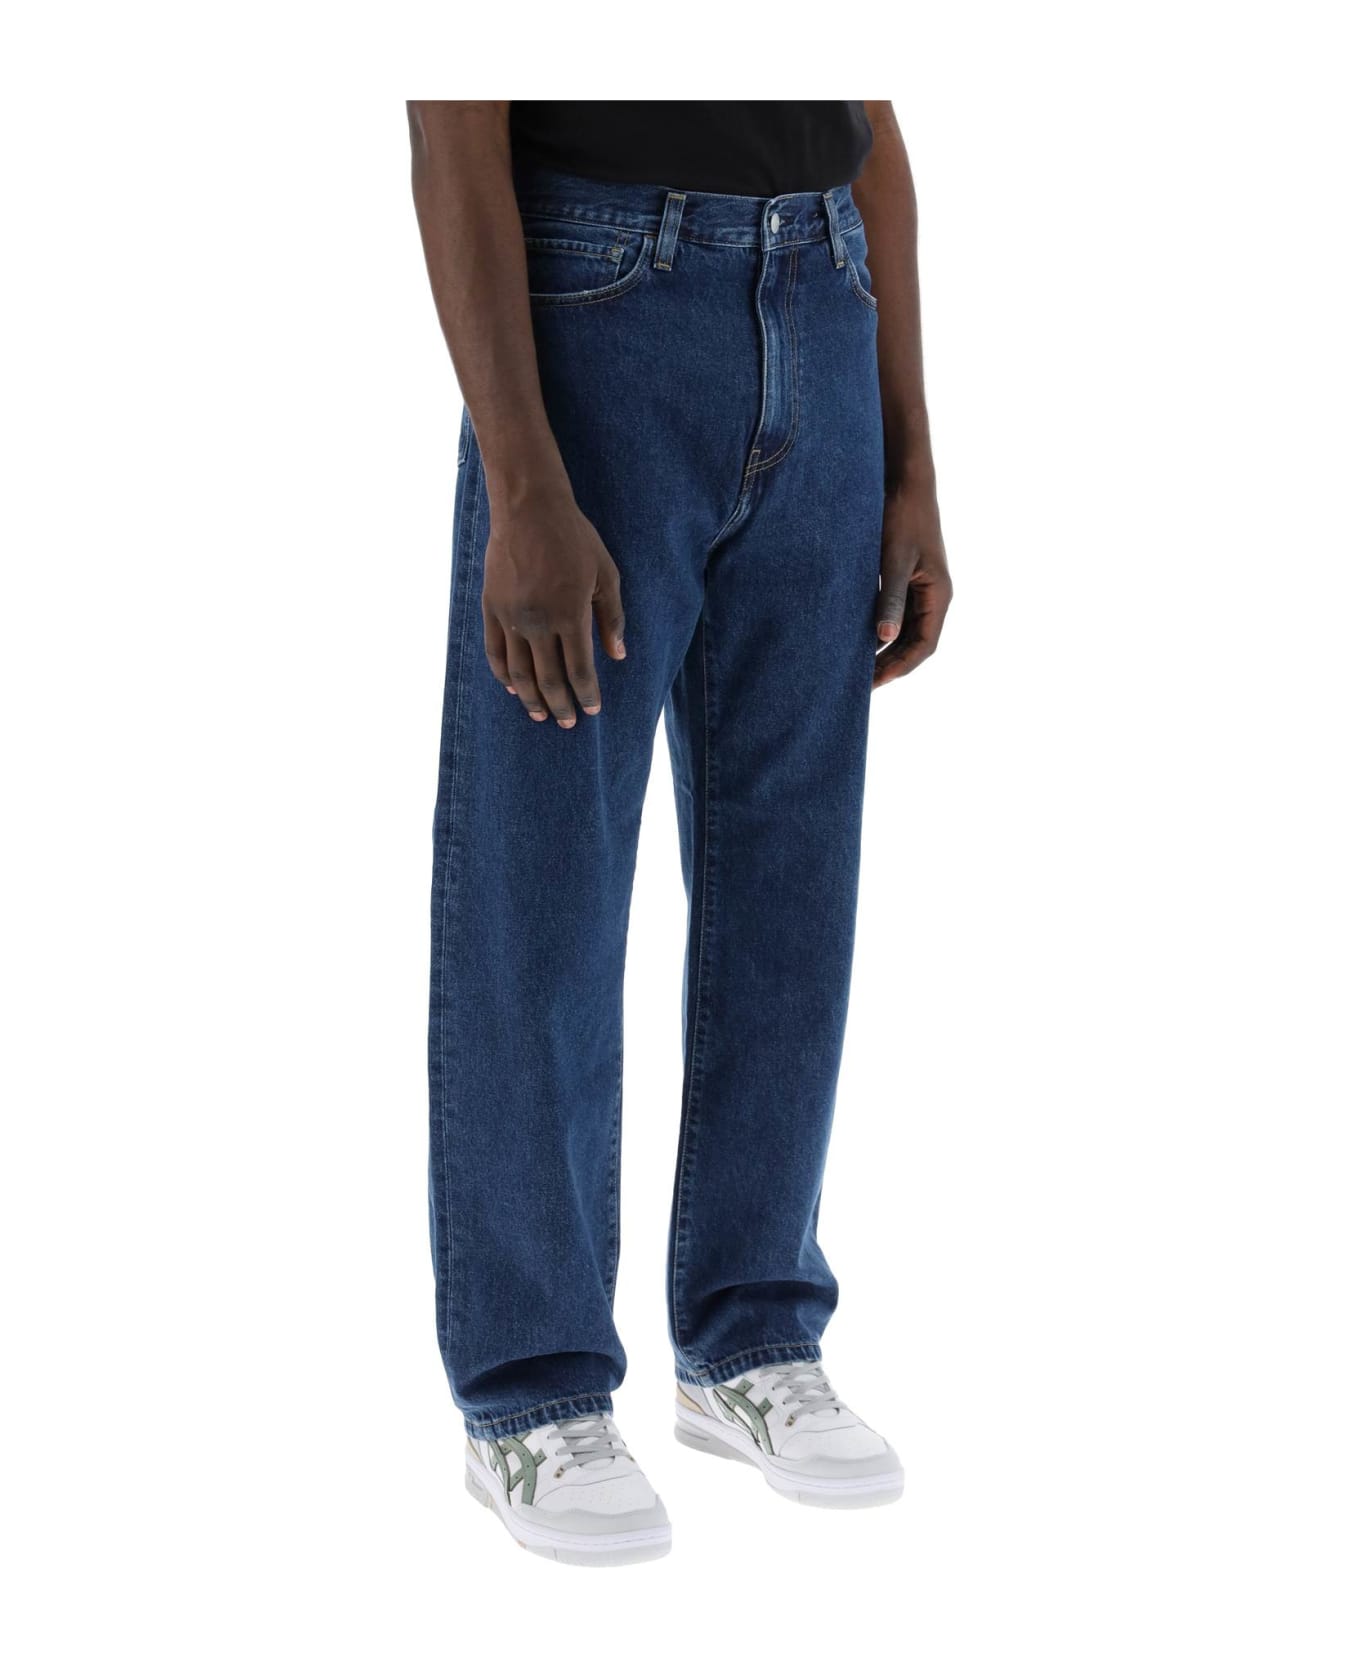 Carhartt Landon Denim Jeans - BLUE HEAVY STONE WASH デニム